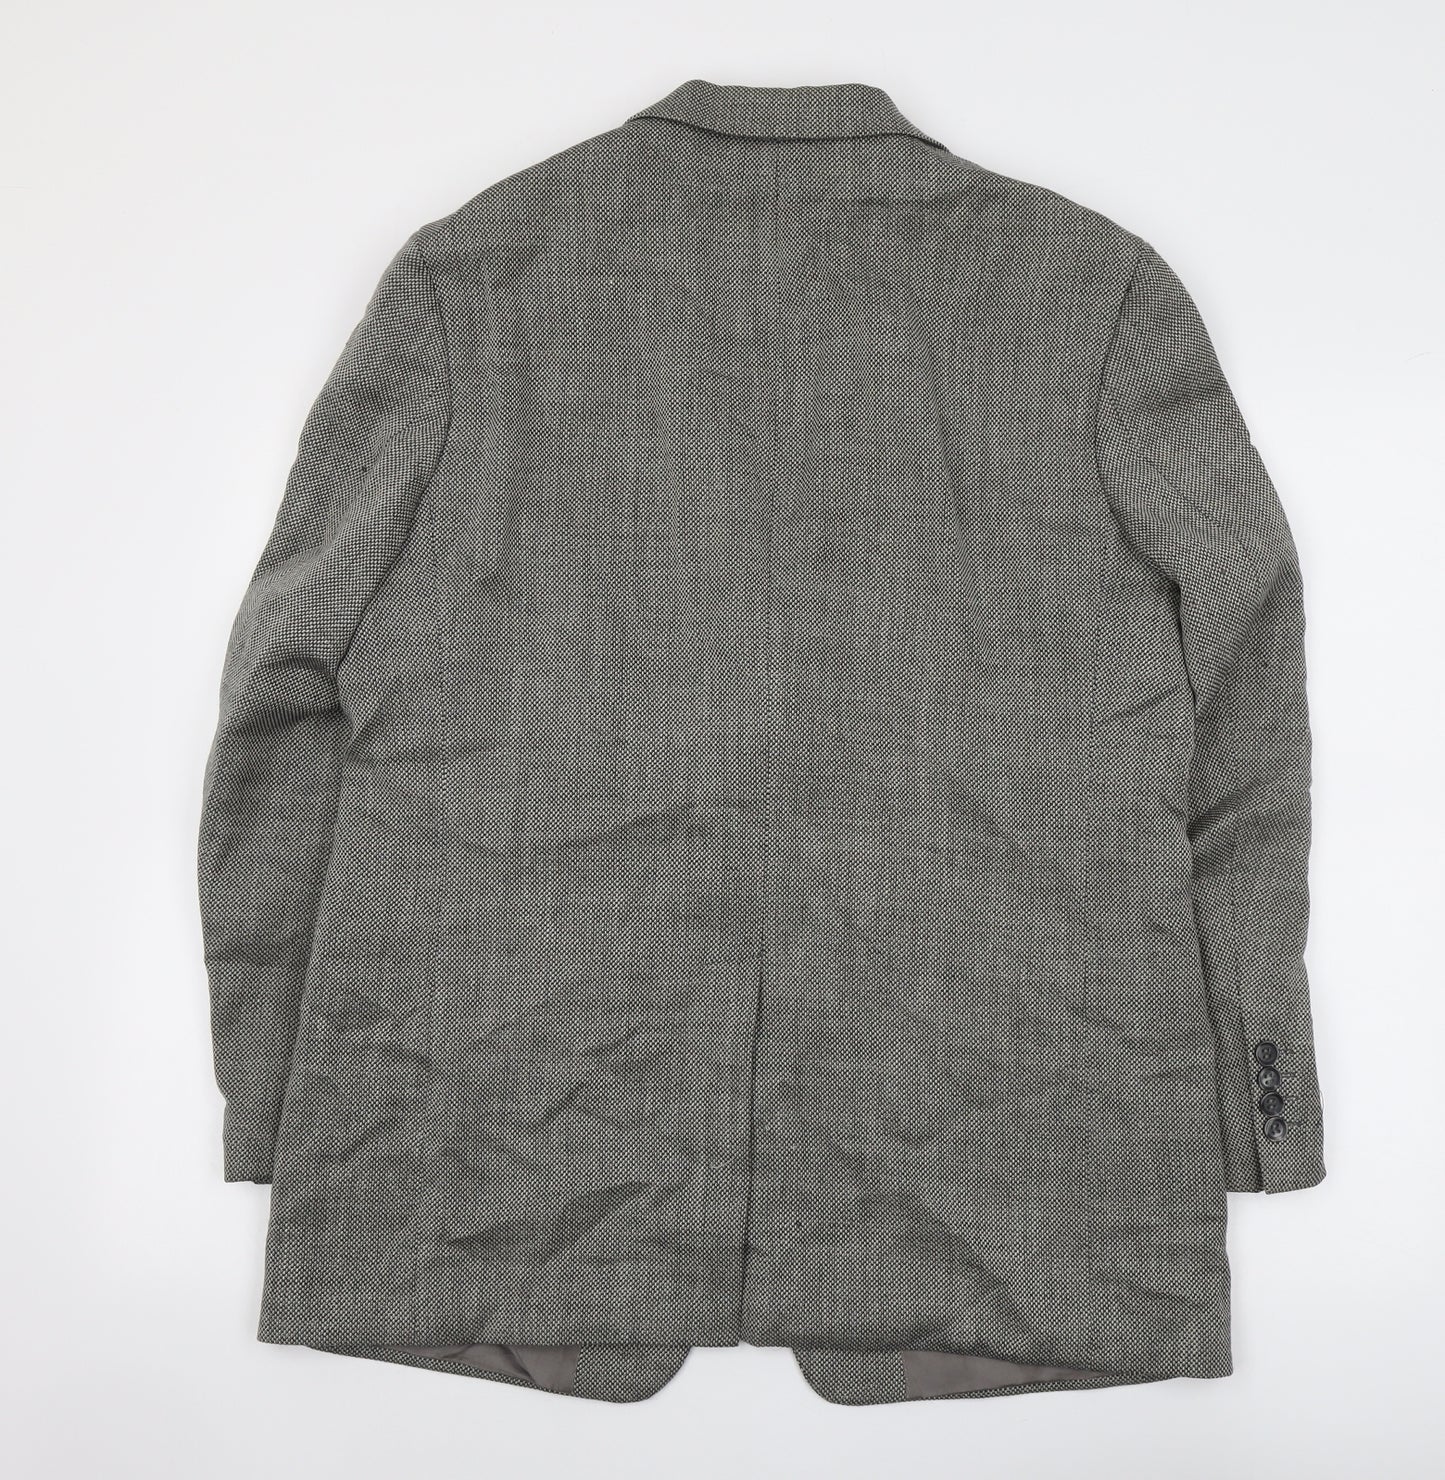 Mario Barutti Mens Grey Geometric Wool Jacket Suit Jacket Size 42 Regular